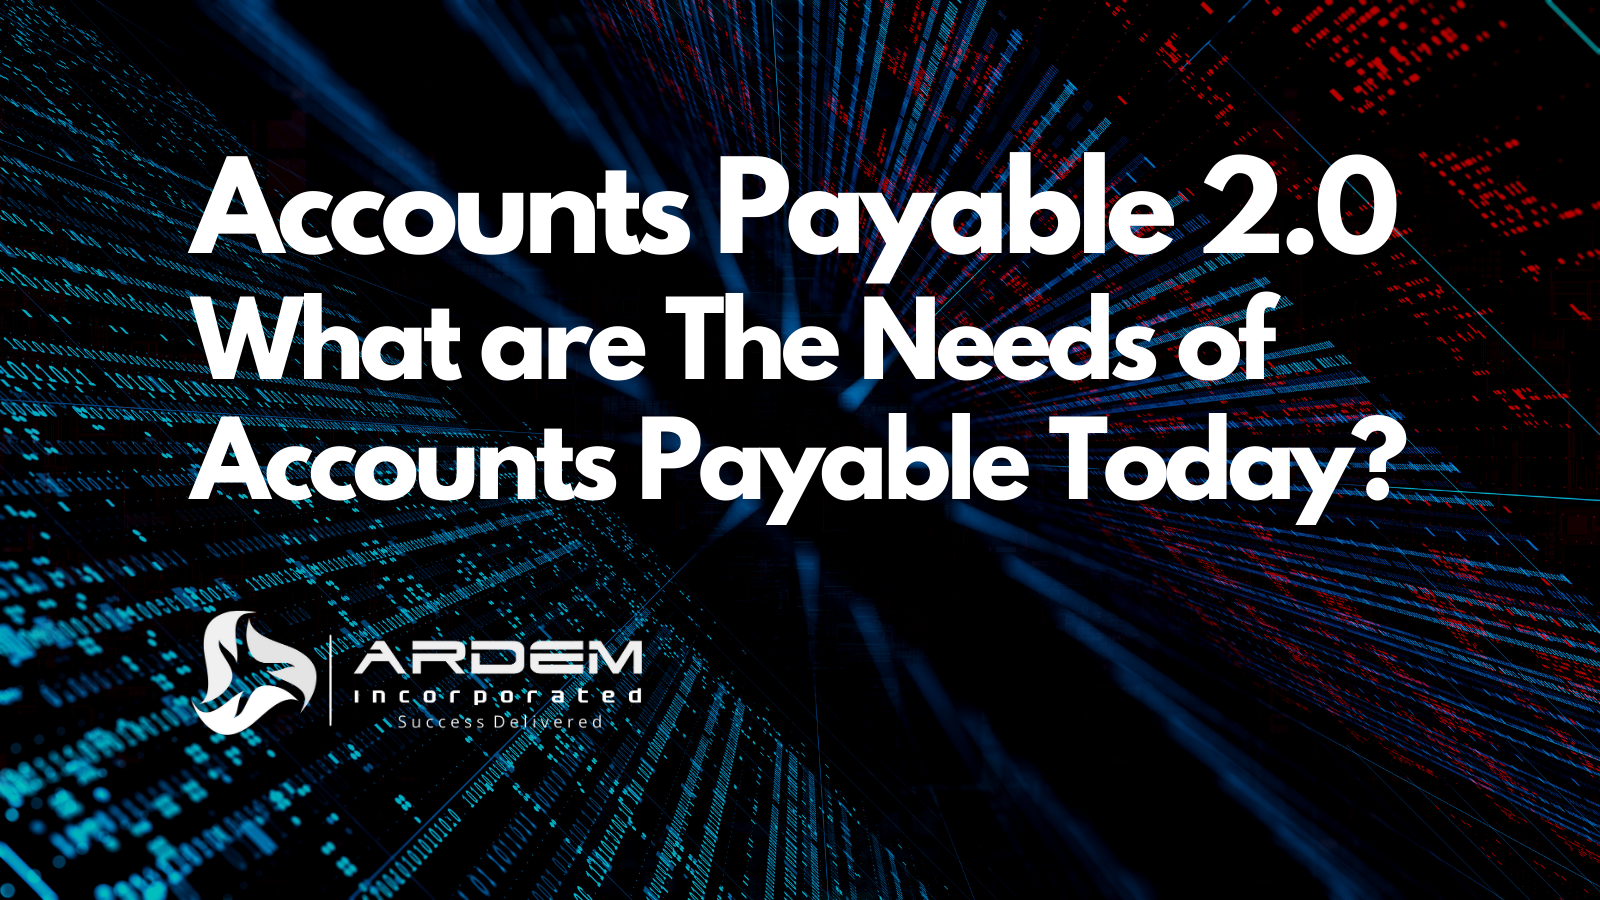 Accounts Payable Finance Outsourcing Blog